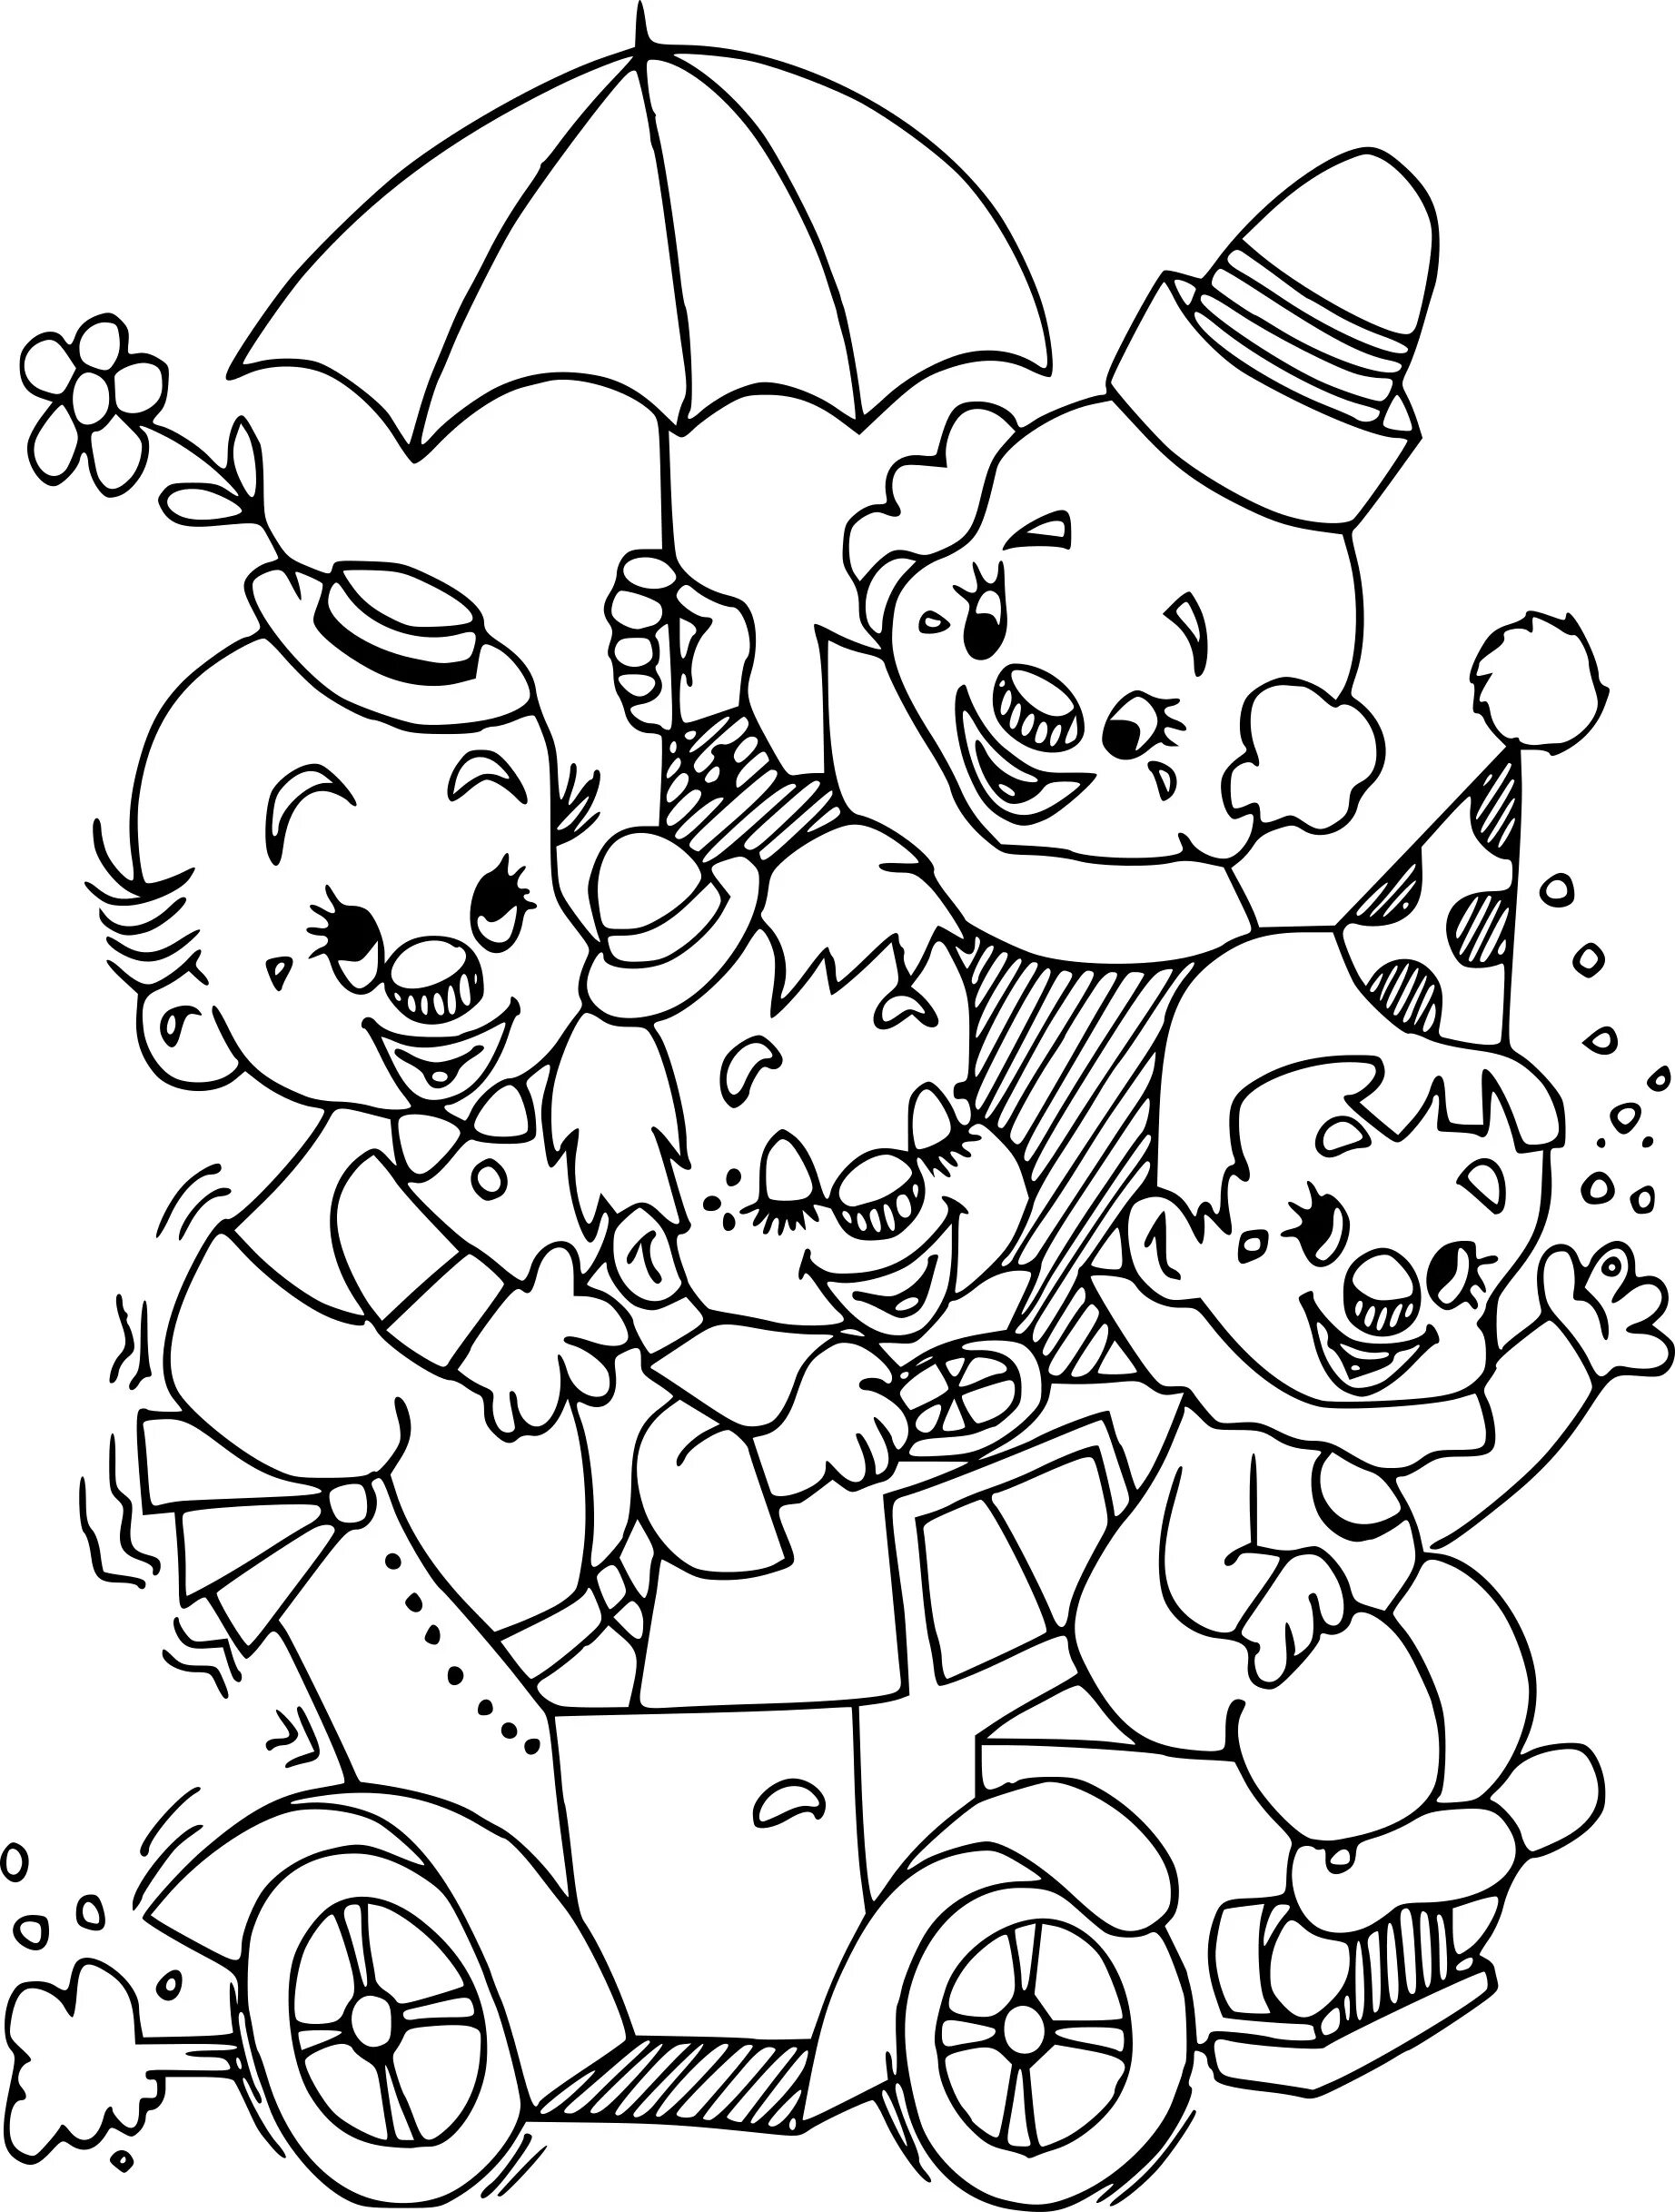 Рисунок на тему 1 апреля. Цирк. Раскраска. Клоун раскраска. Цирк раскраска для детей. Цирк раскраска для малышей.